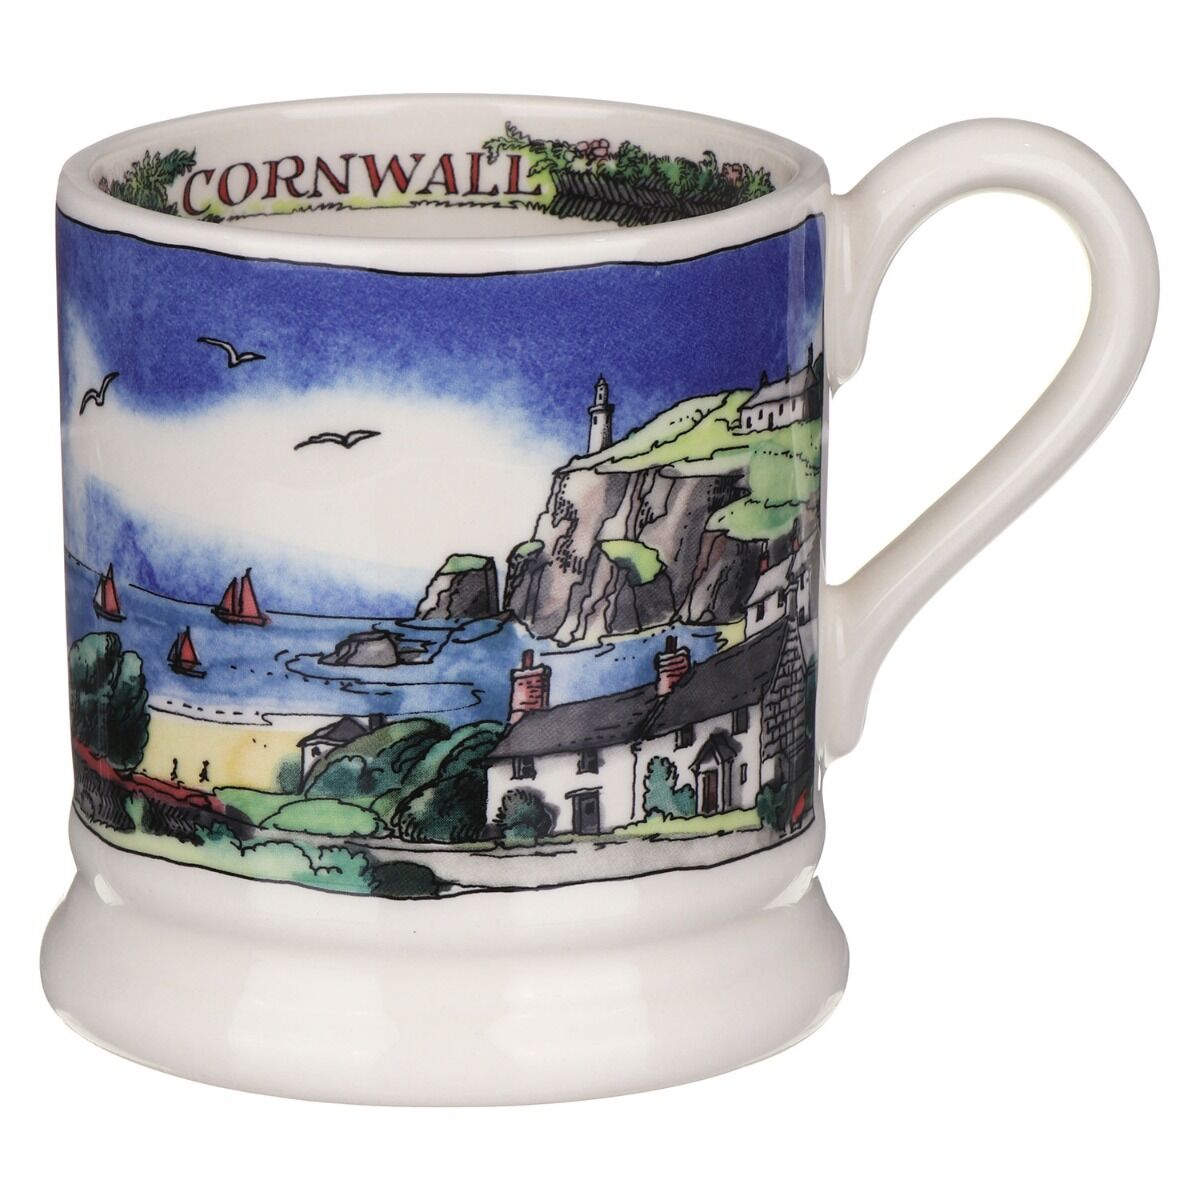 Cornwall 1/2 Pint Mug